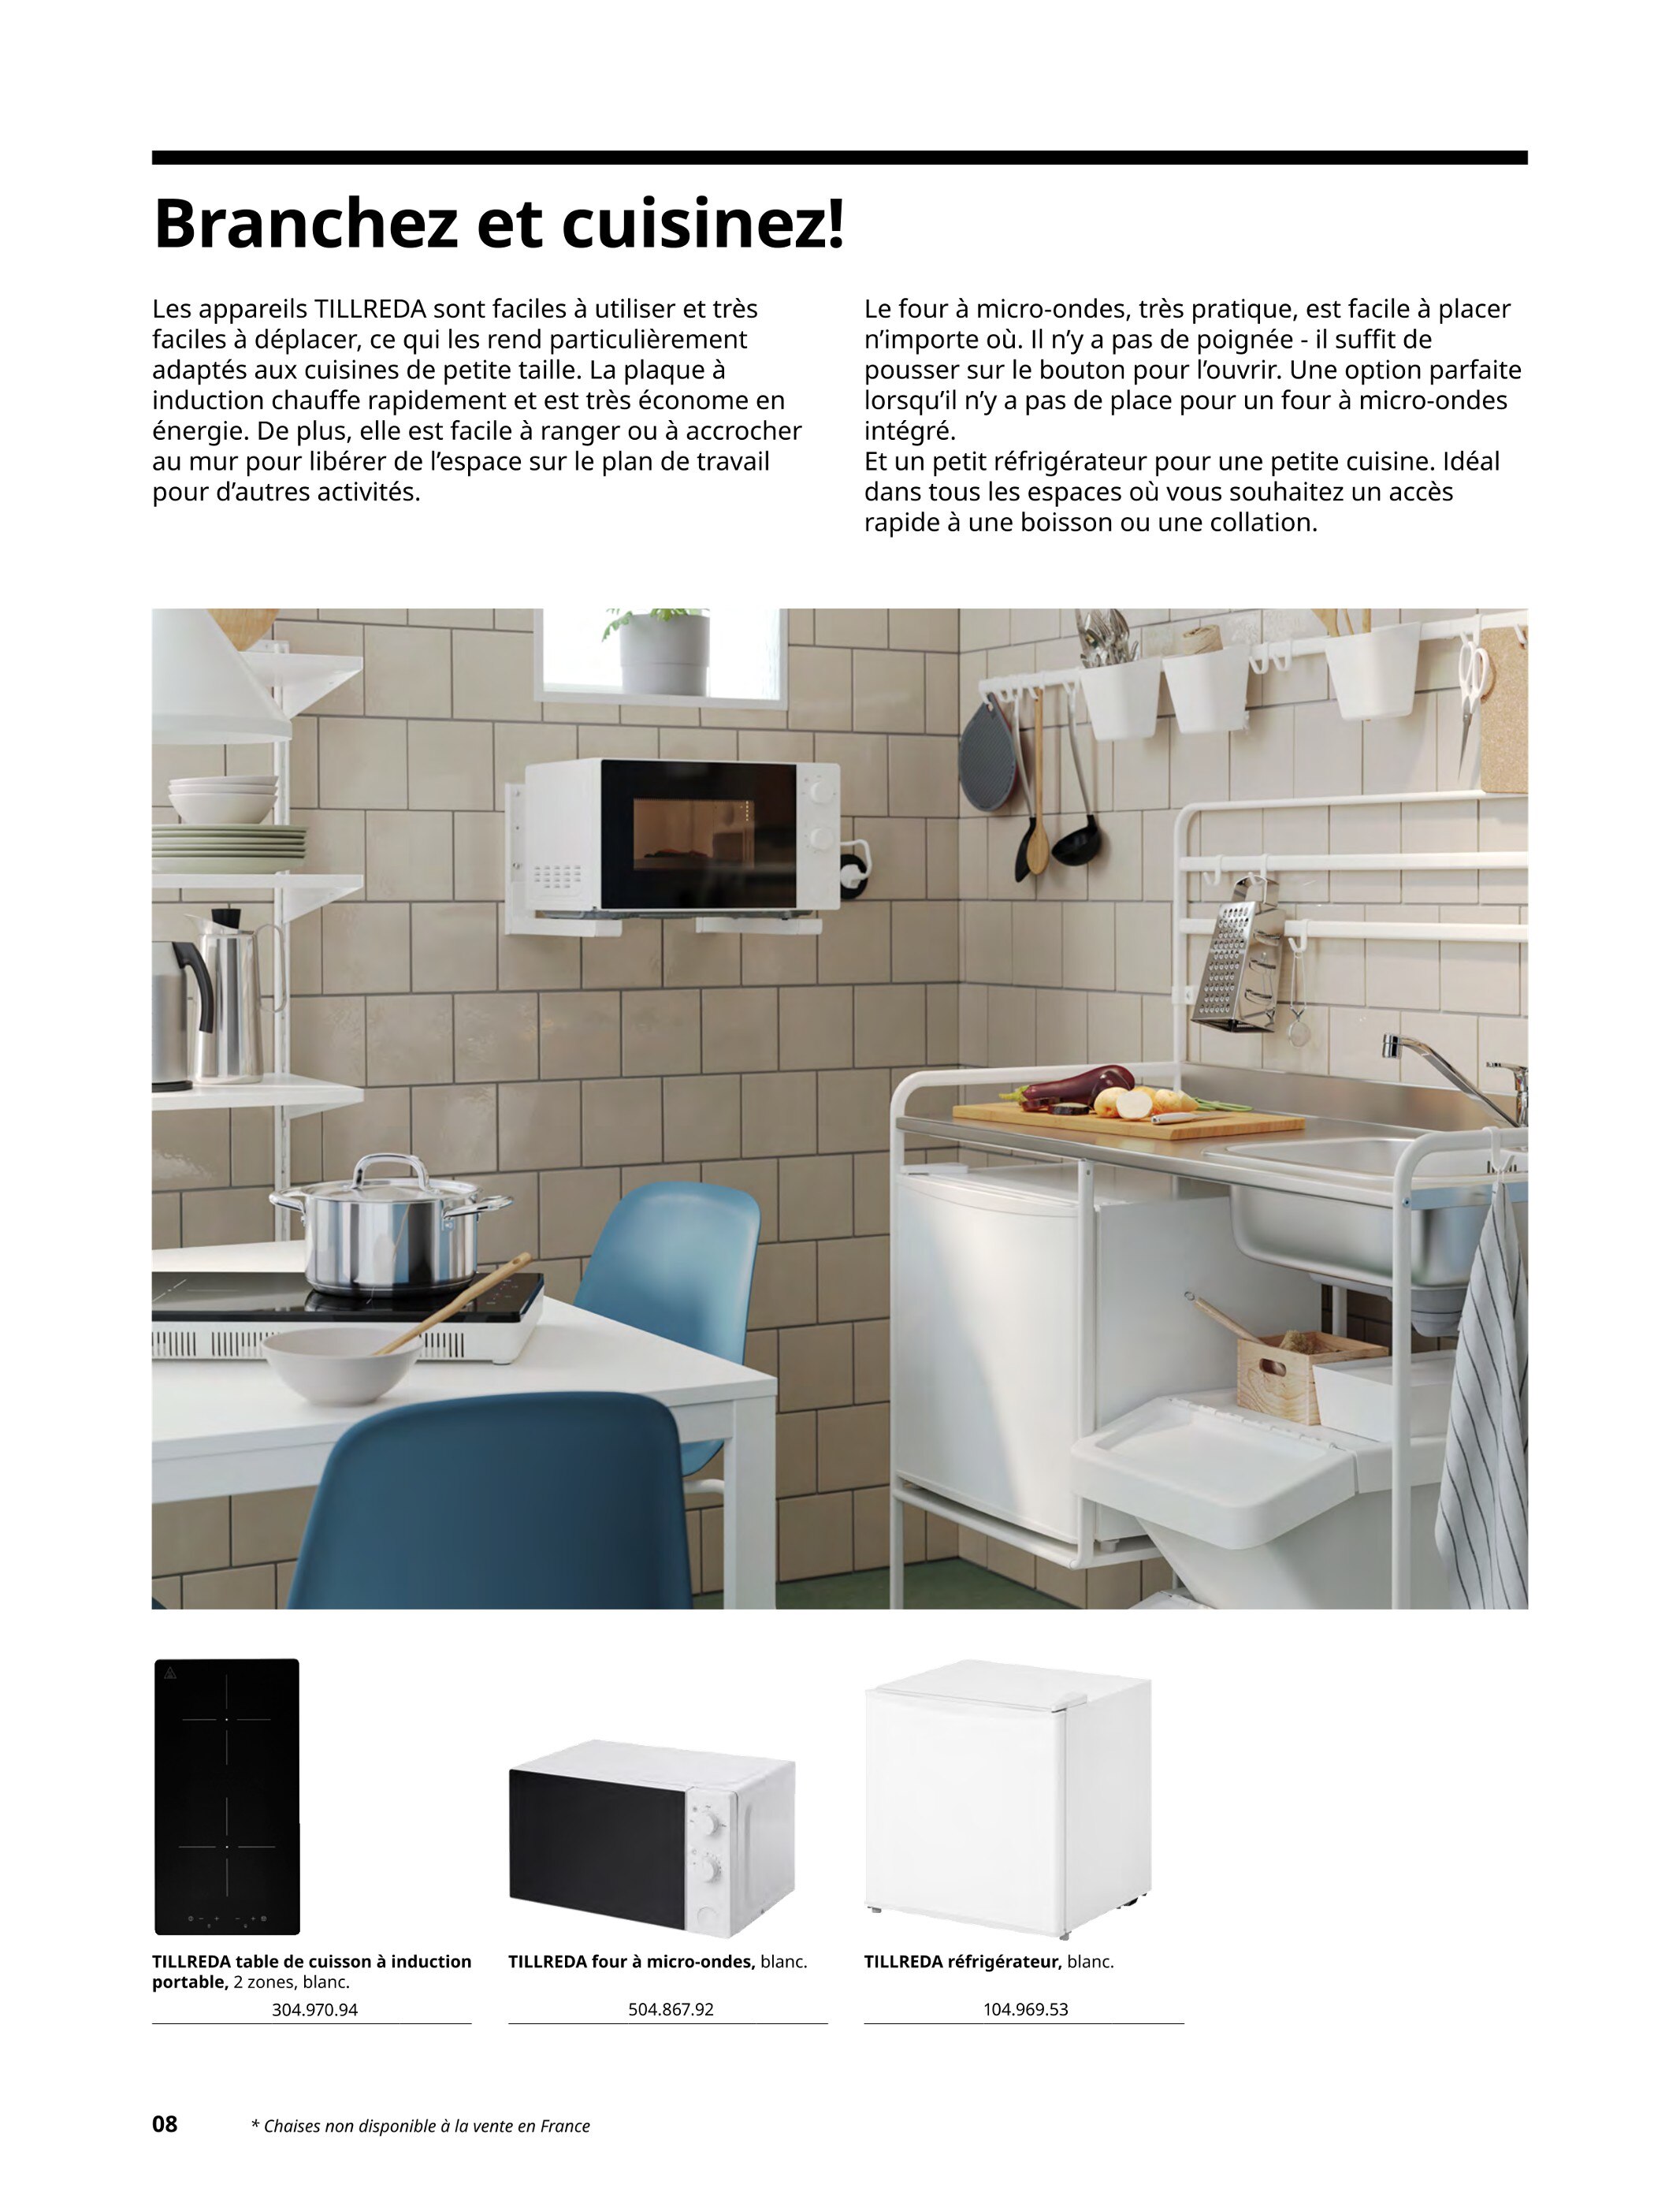 TILLREDA Plaque de cuisson induction mobile, 2 zones blanc - IKEA